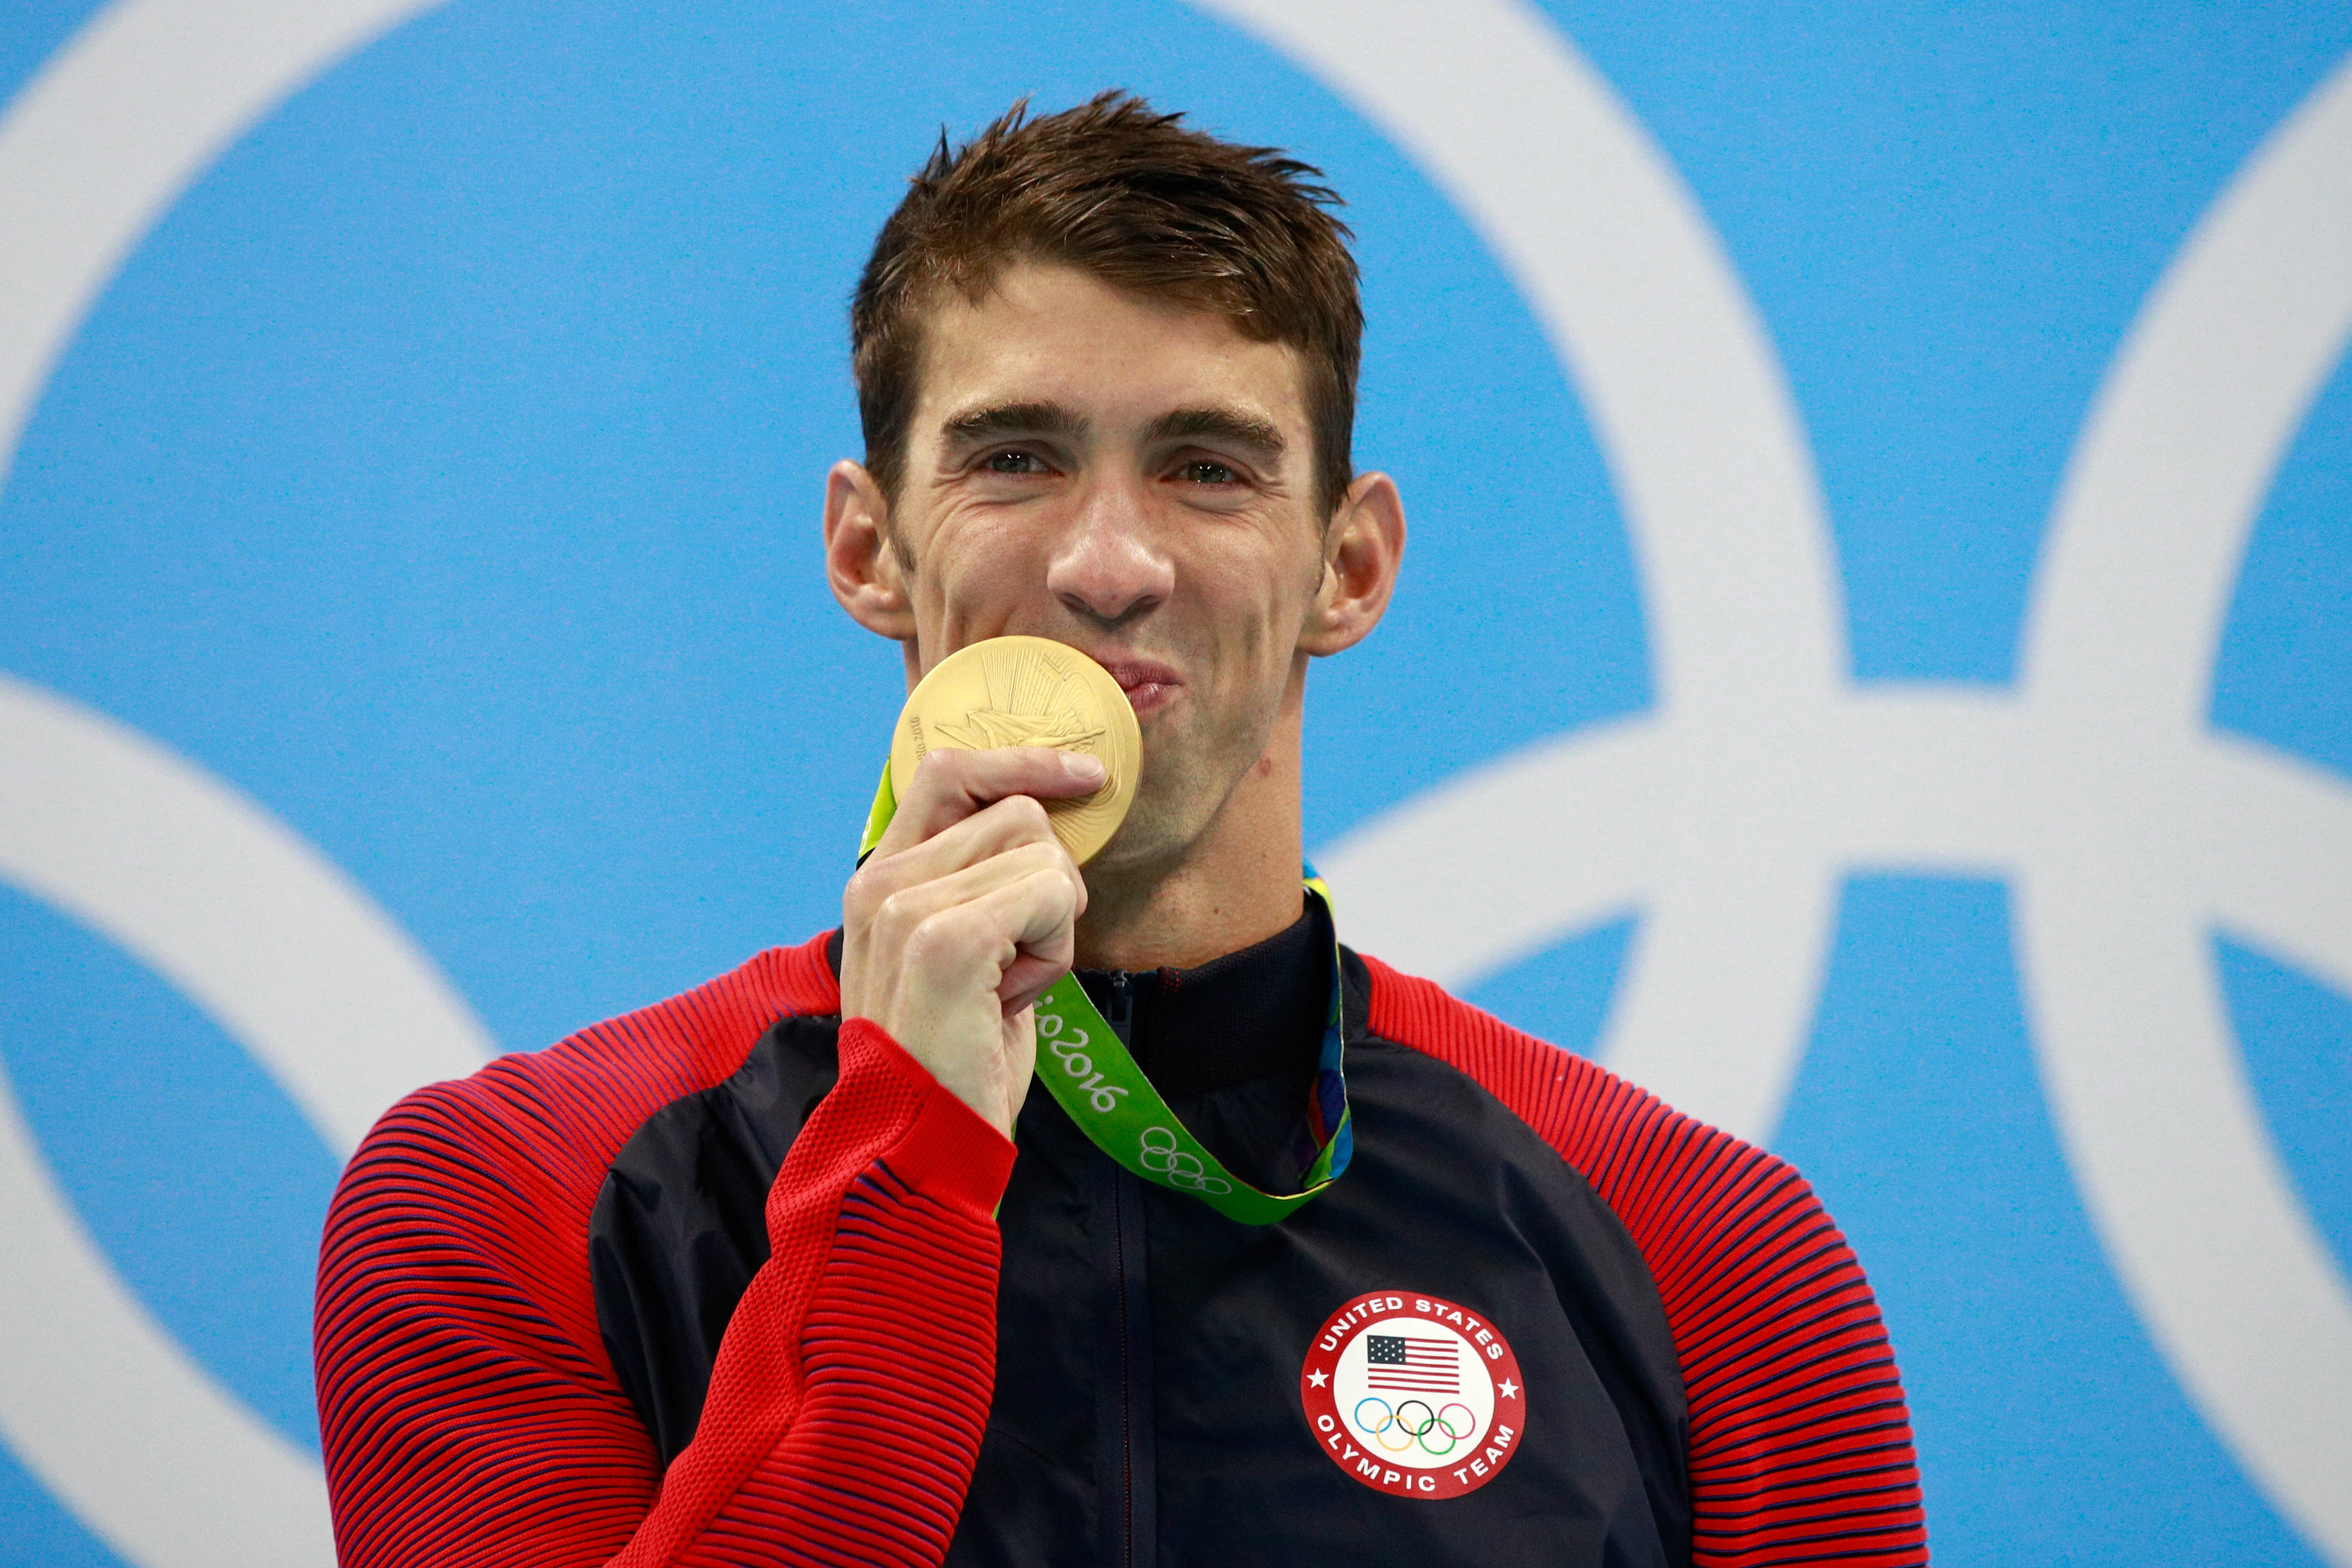 Closeup of Michael Phelps